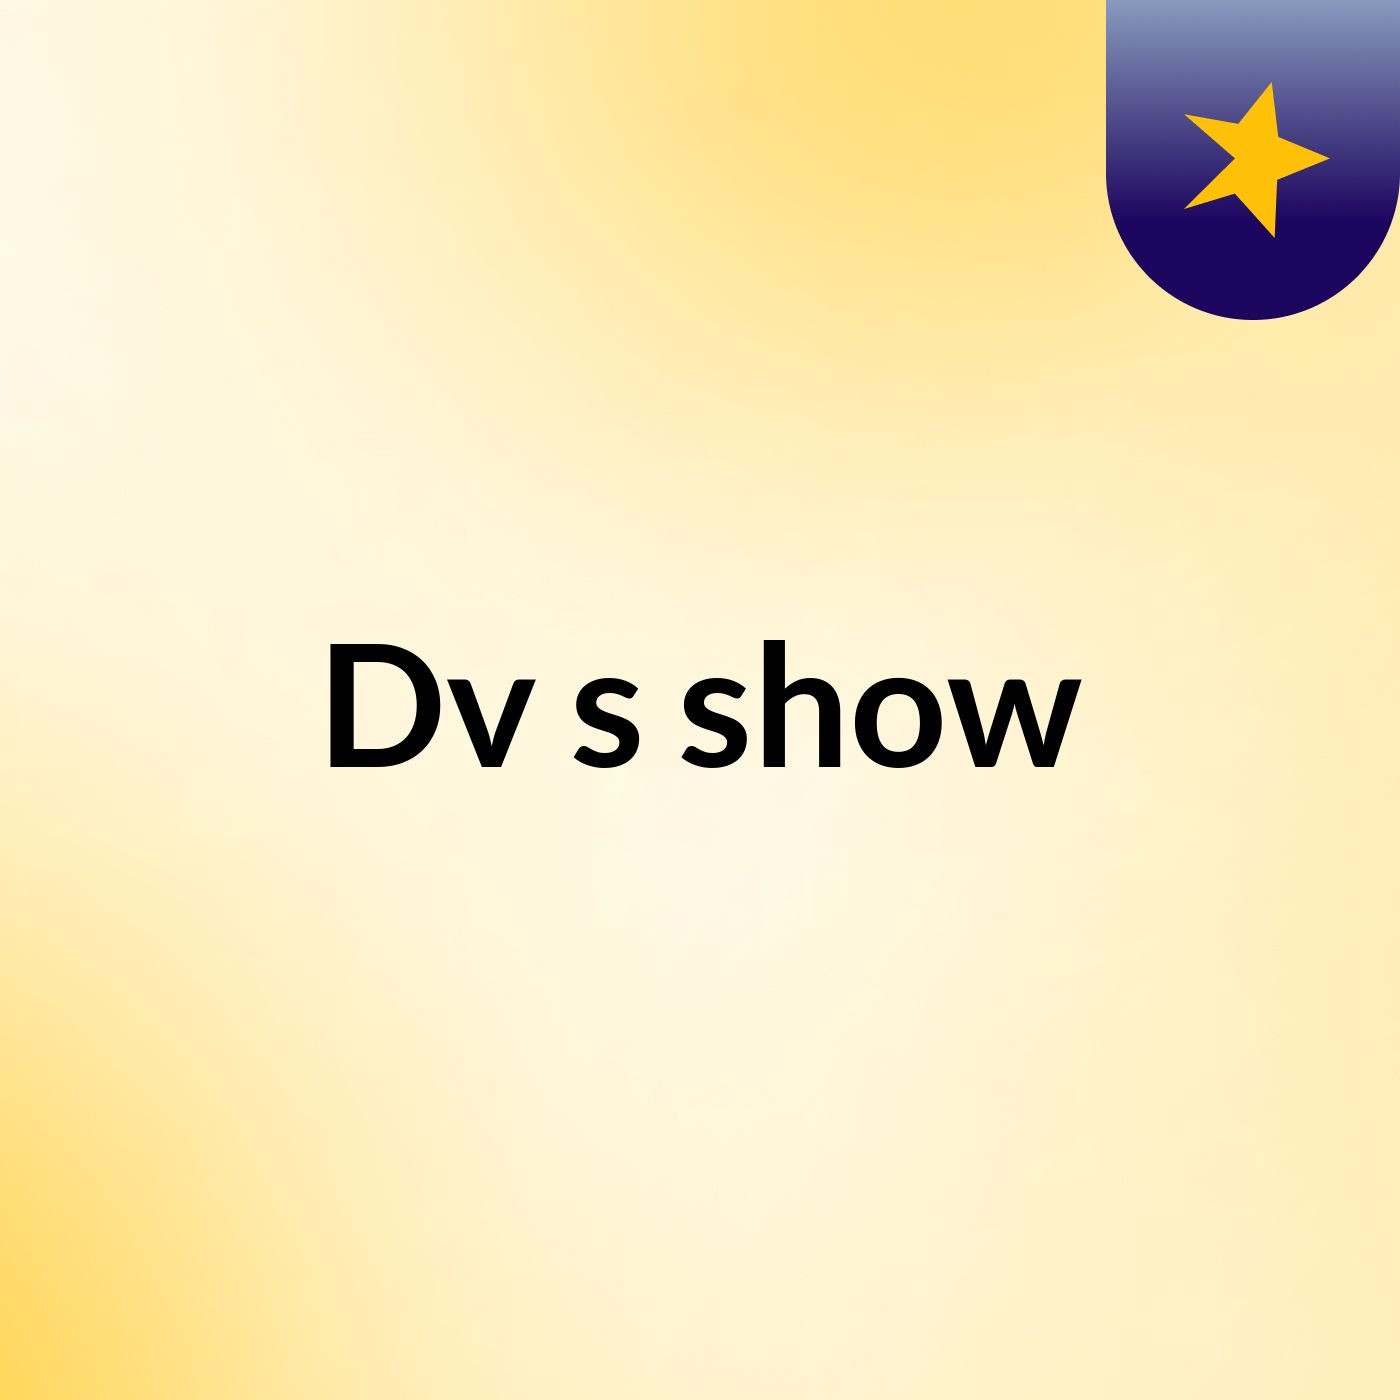 Dv's show